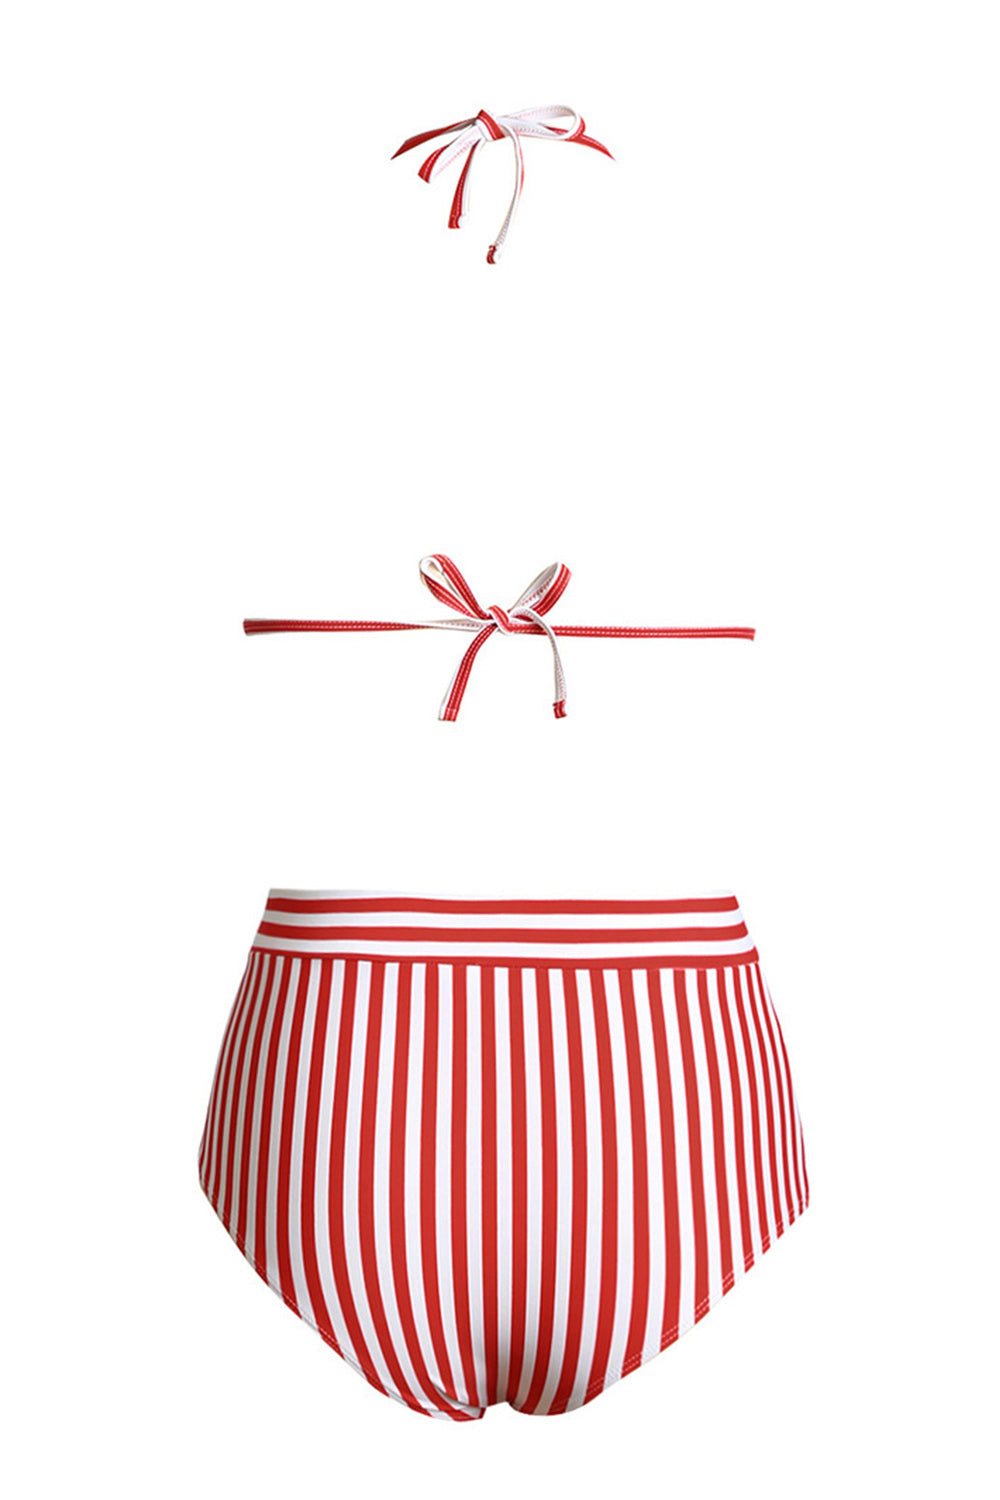 Iyasson Womens High Waist Two Pieces Bikini Set Padded Stripe Tassel Swimsuit